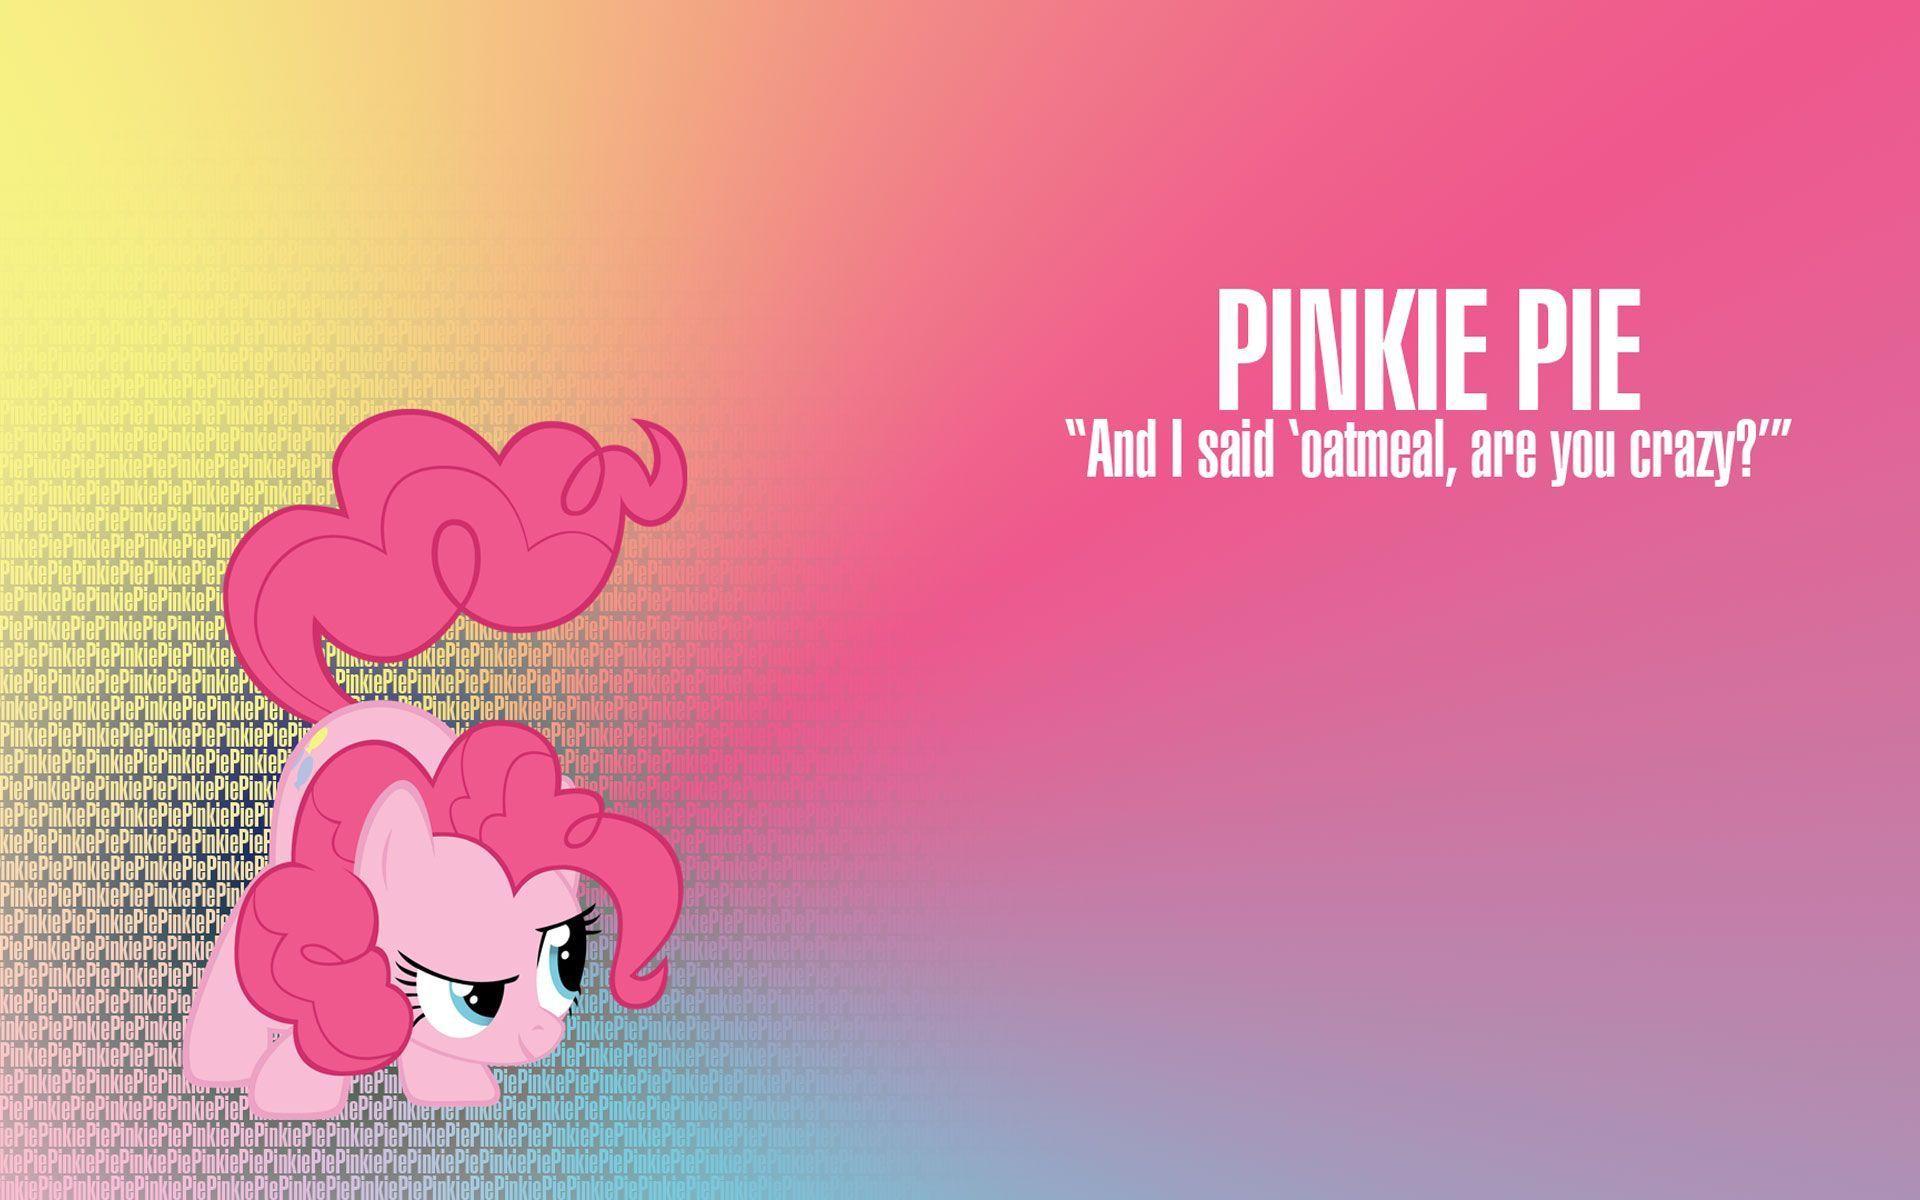 My Little Pony Wallpaper Little Pony Friendship is Magic